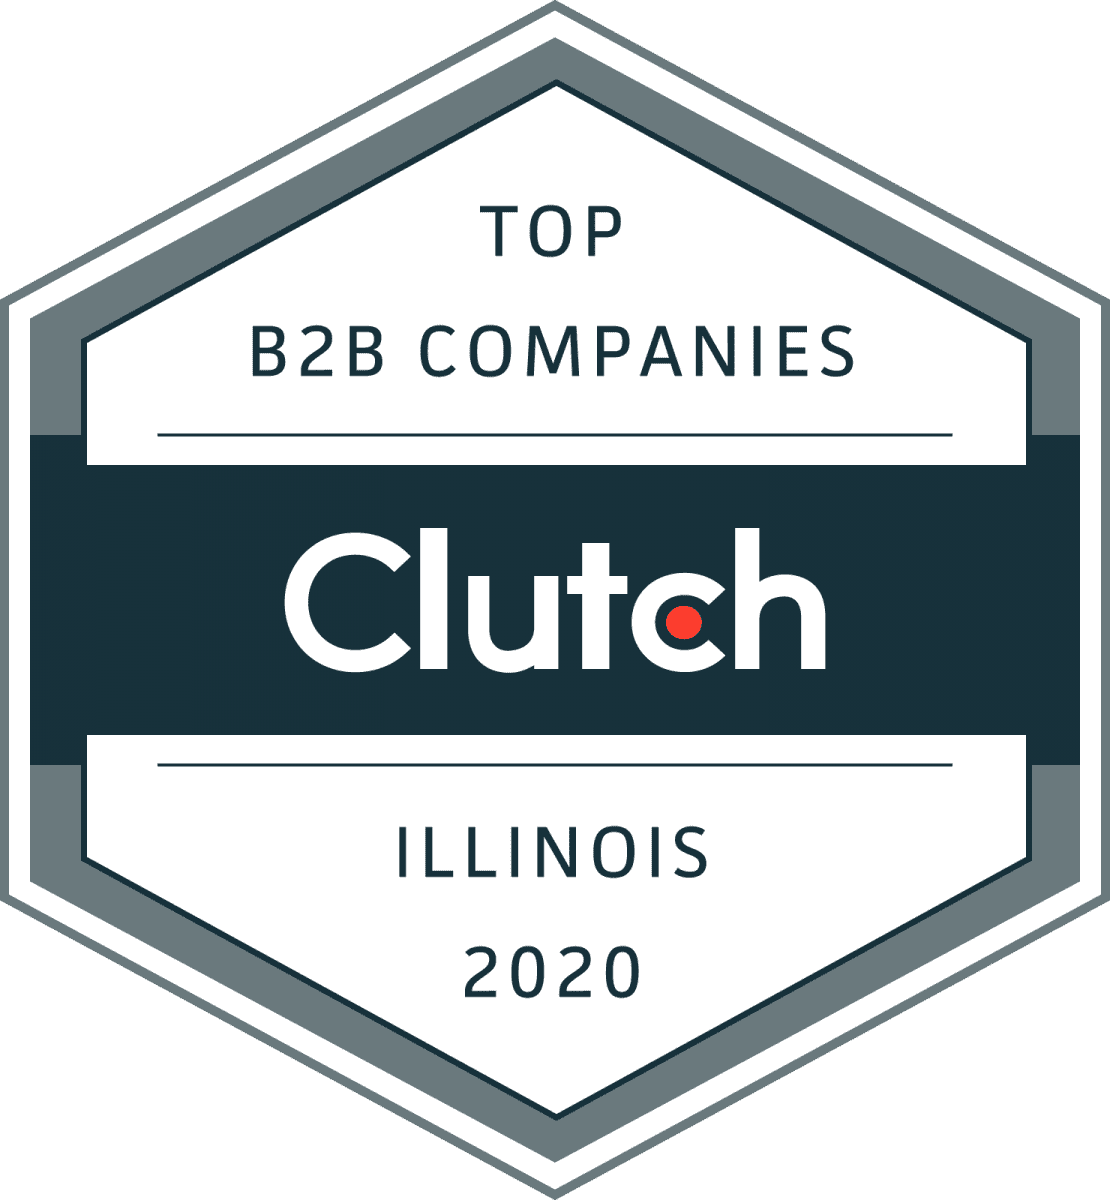 Top B2B Companies Illinois 2020